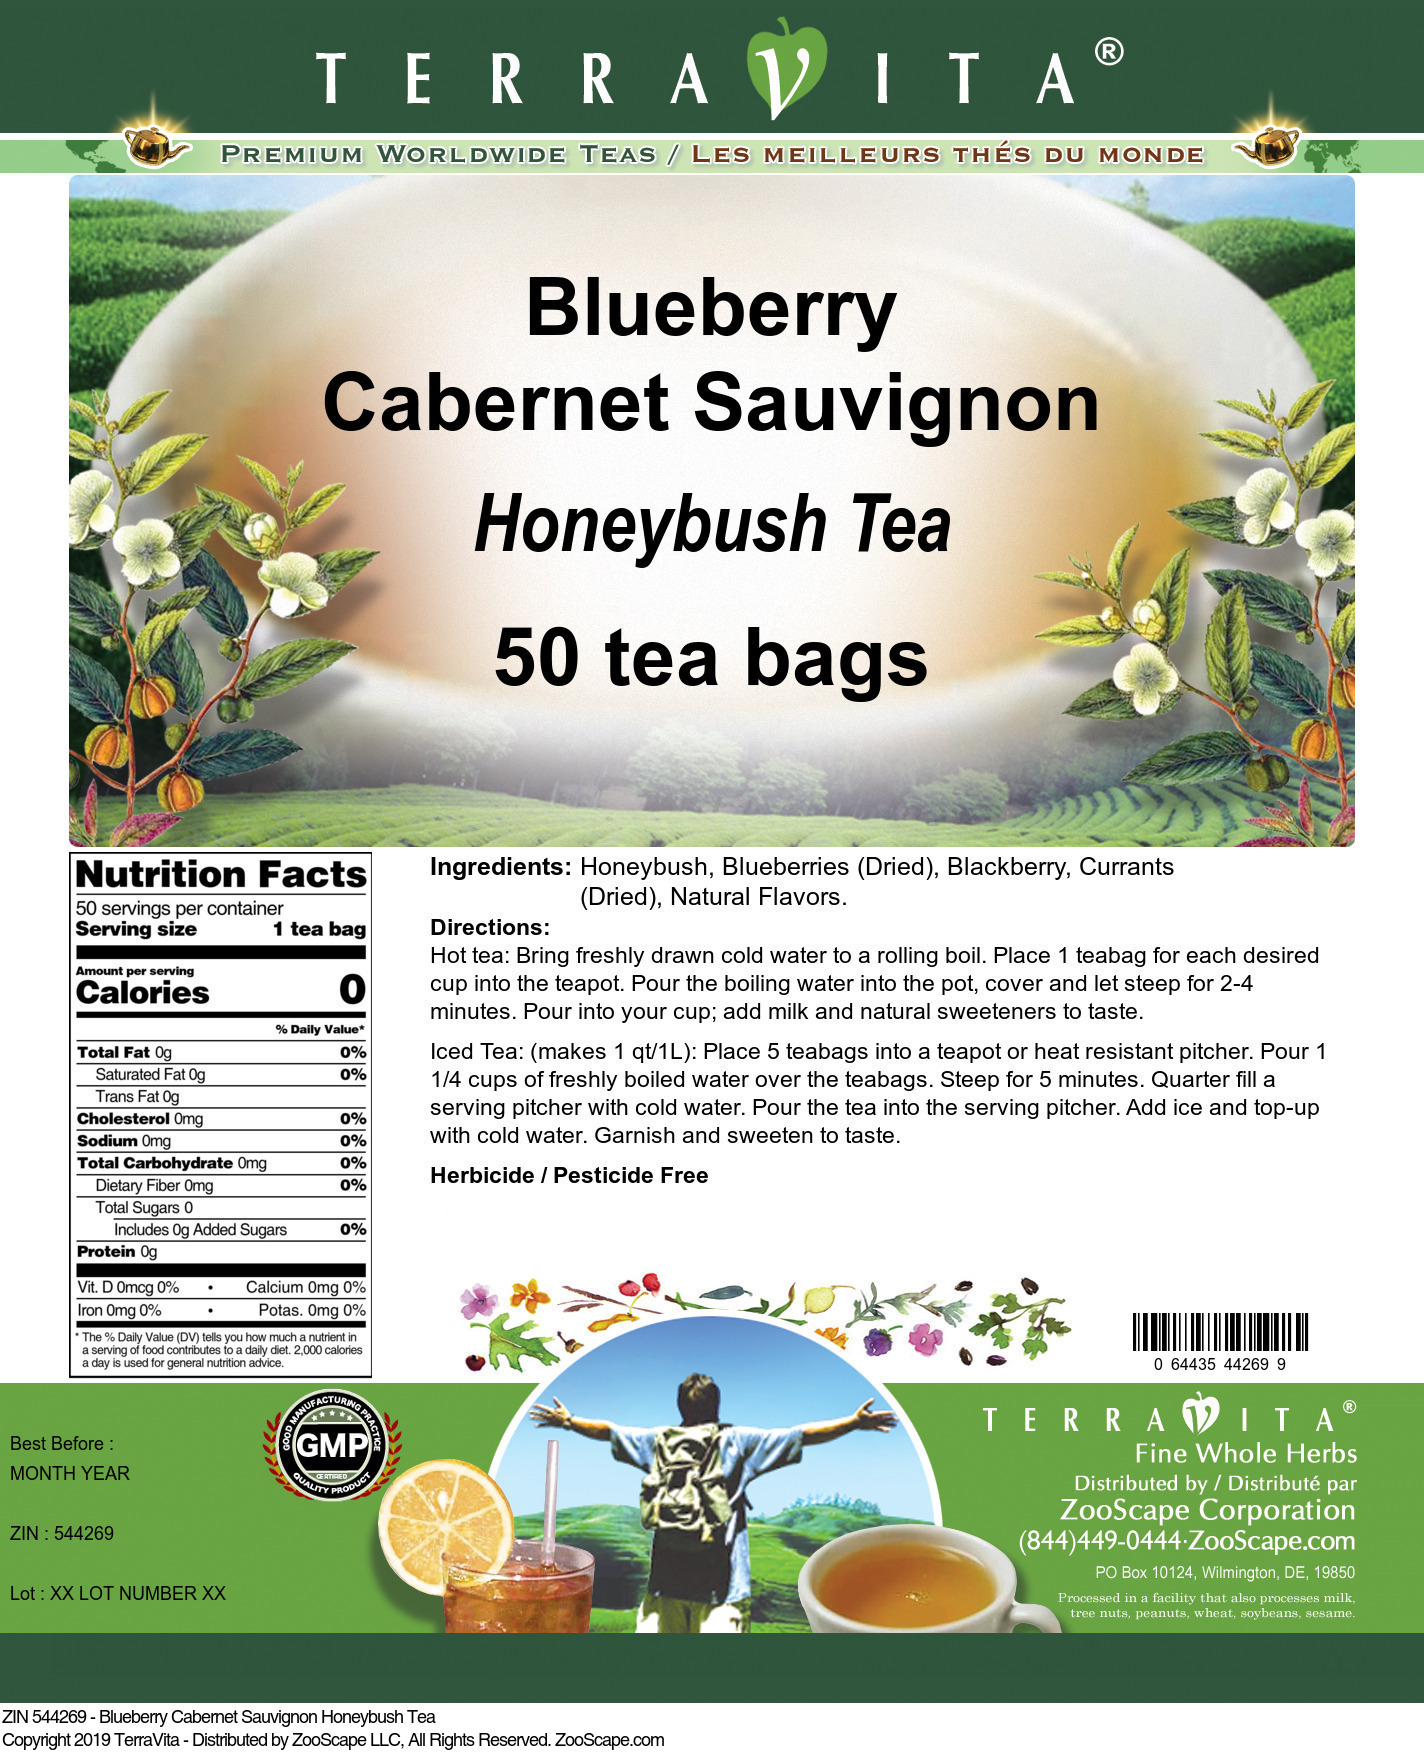 Blueberry Cabernet Sauvignon Honeybush Tea - Label